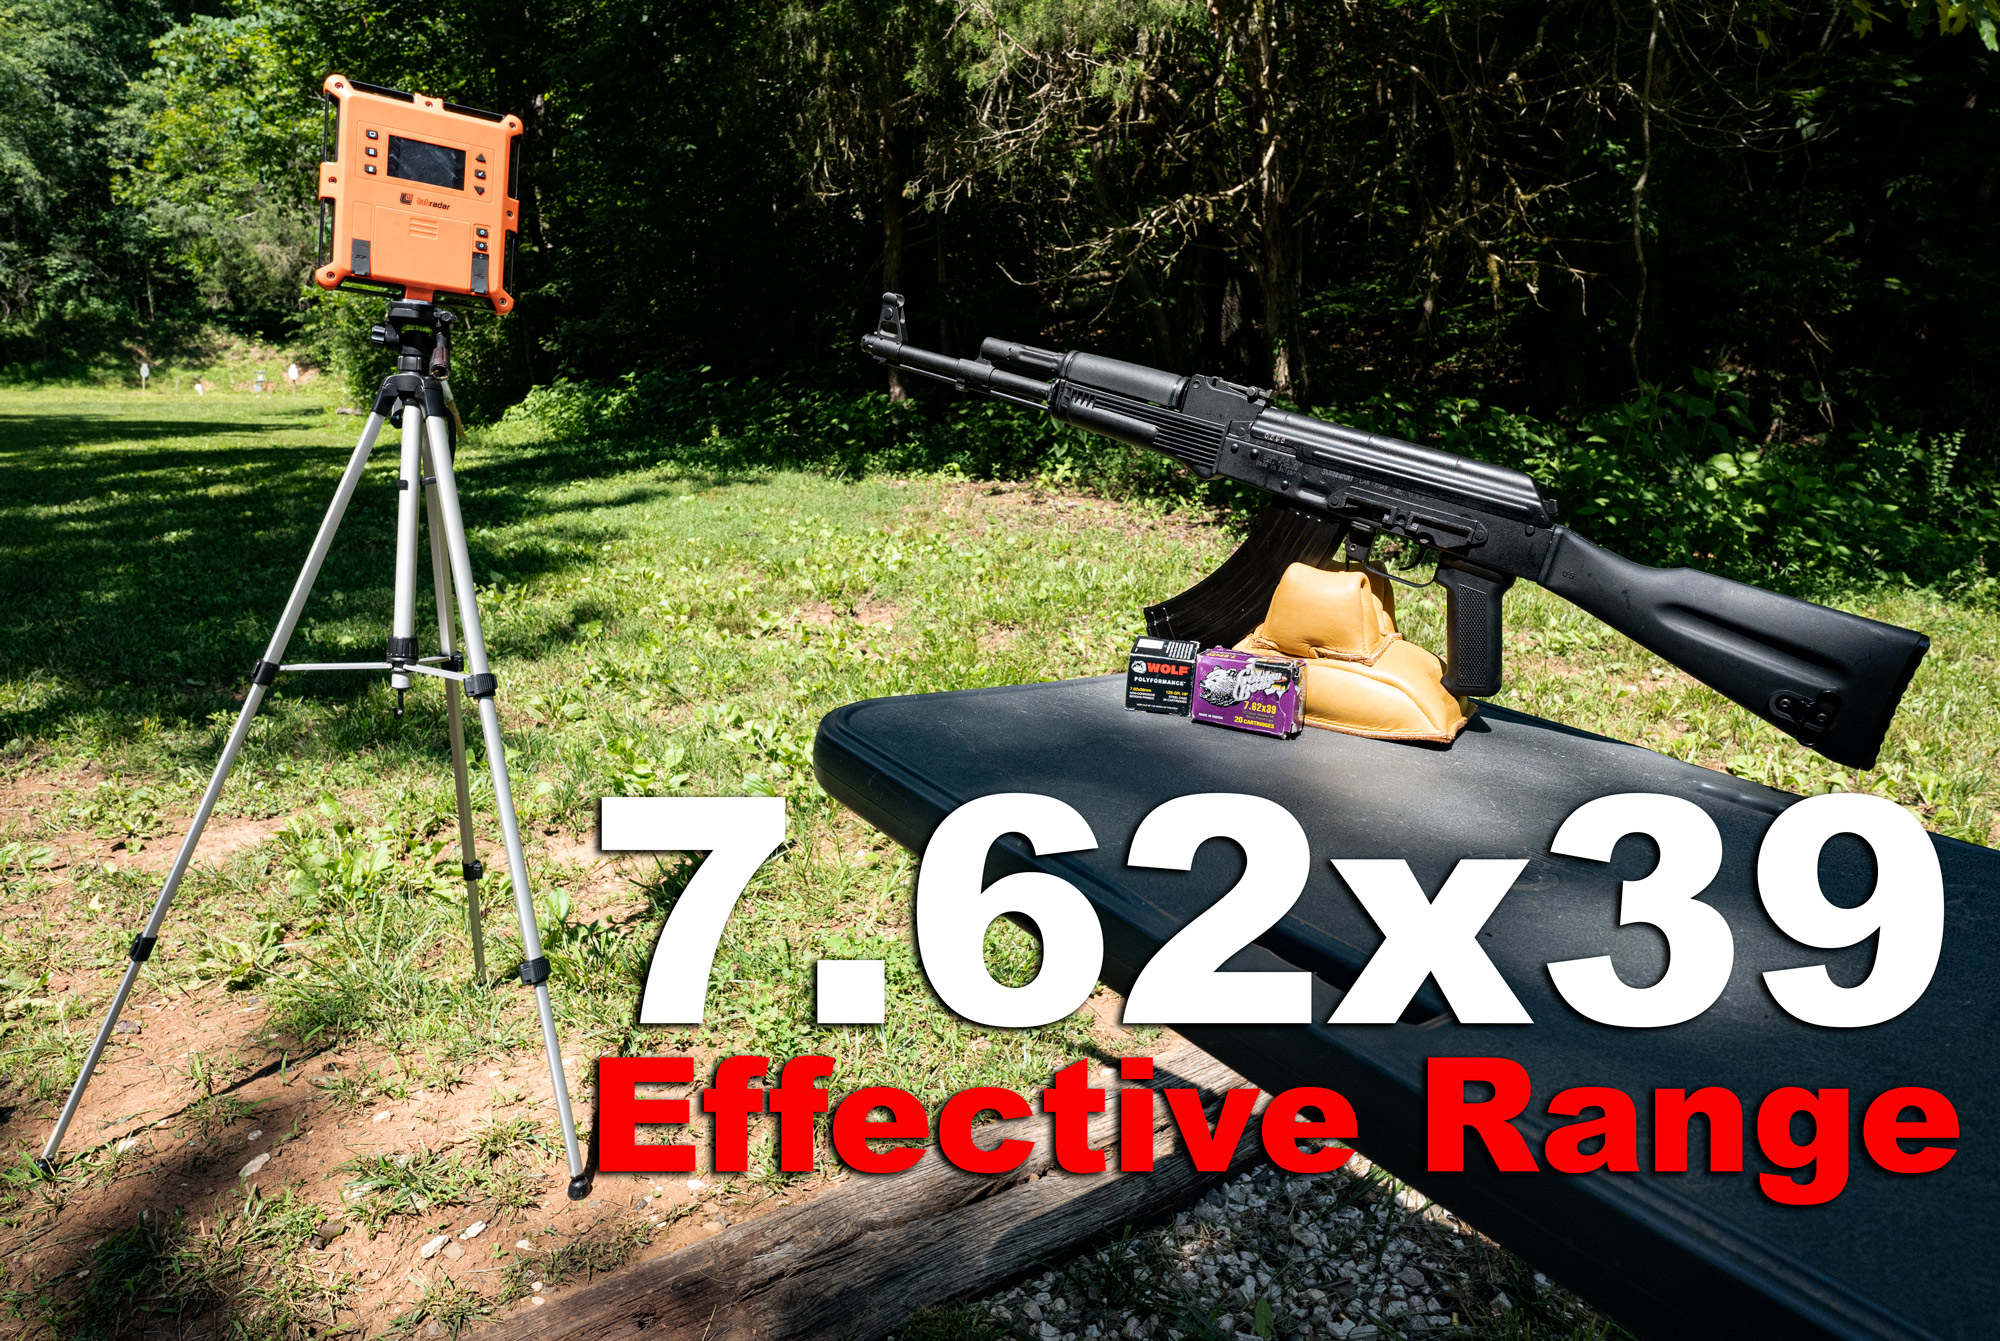 The Effective Range of 7.62x39